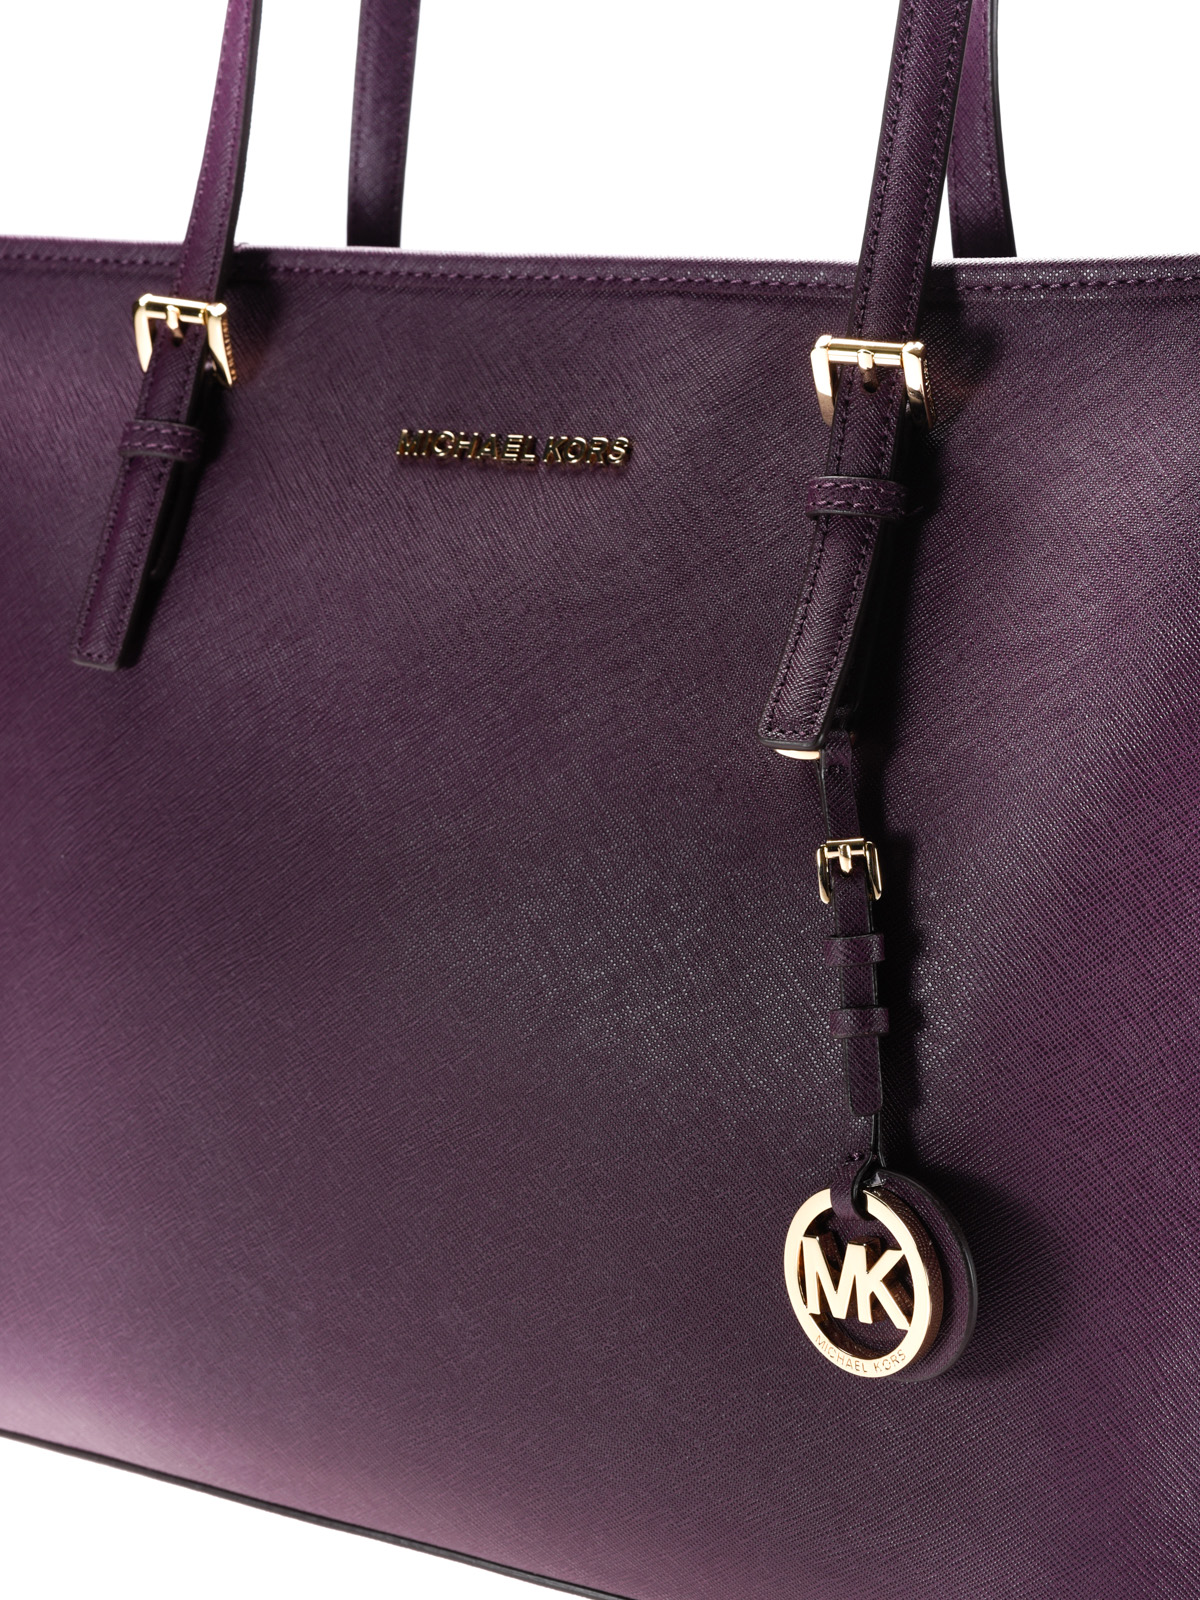 purple tote - totes bags 